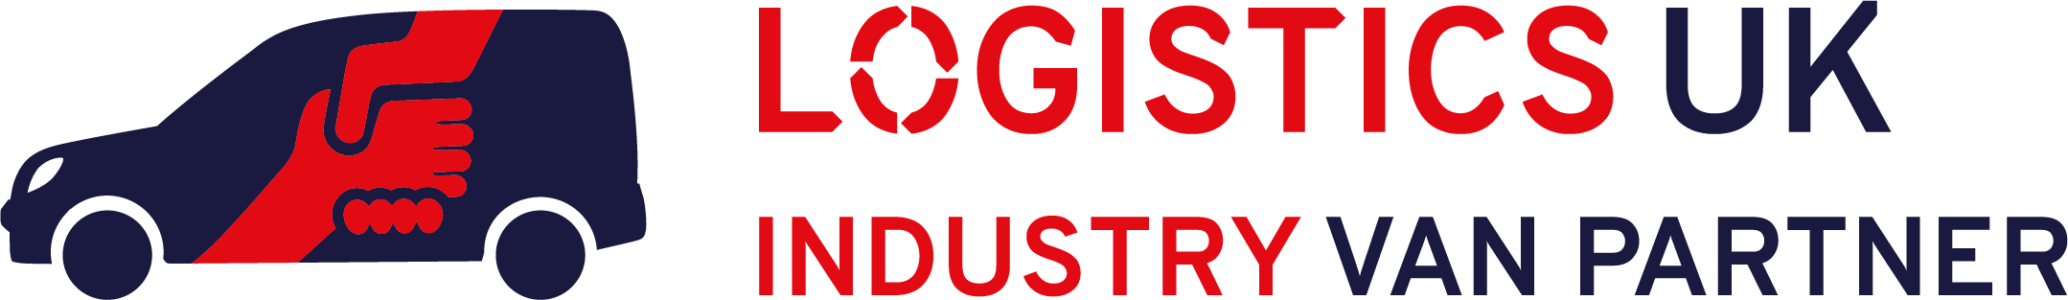 Logistics UK Van Industry Partner Logo